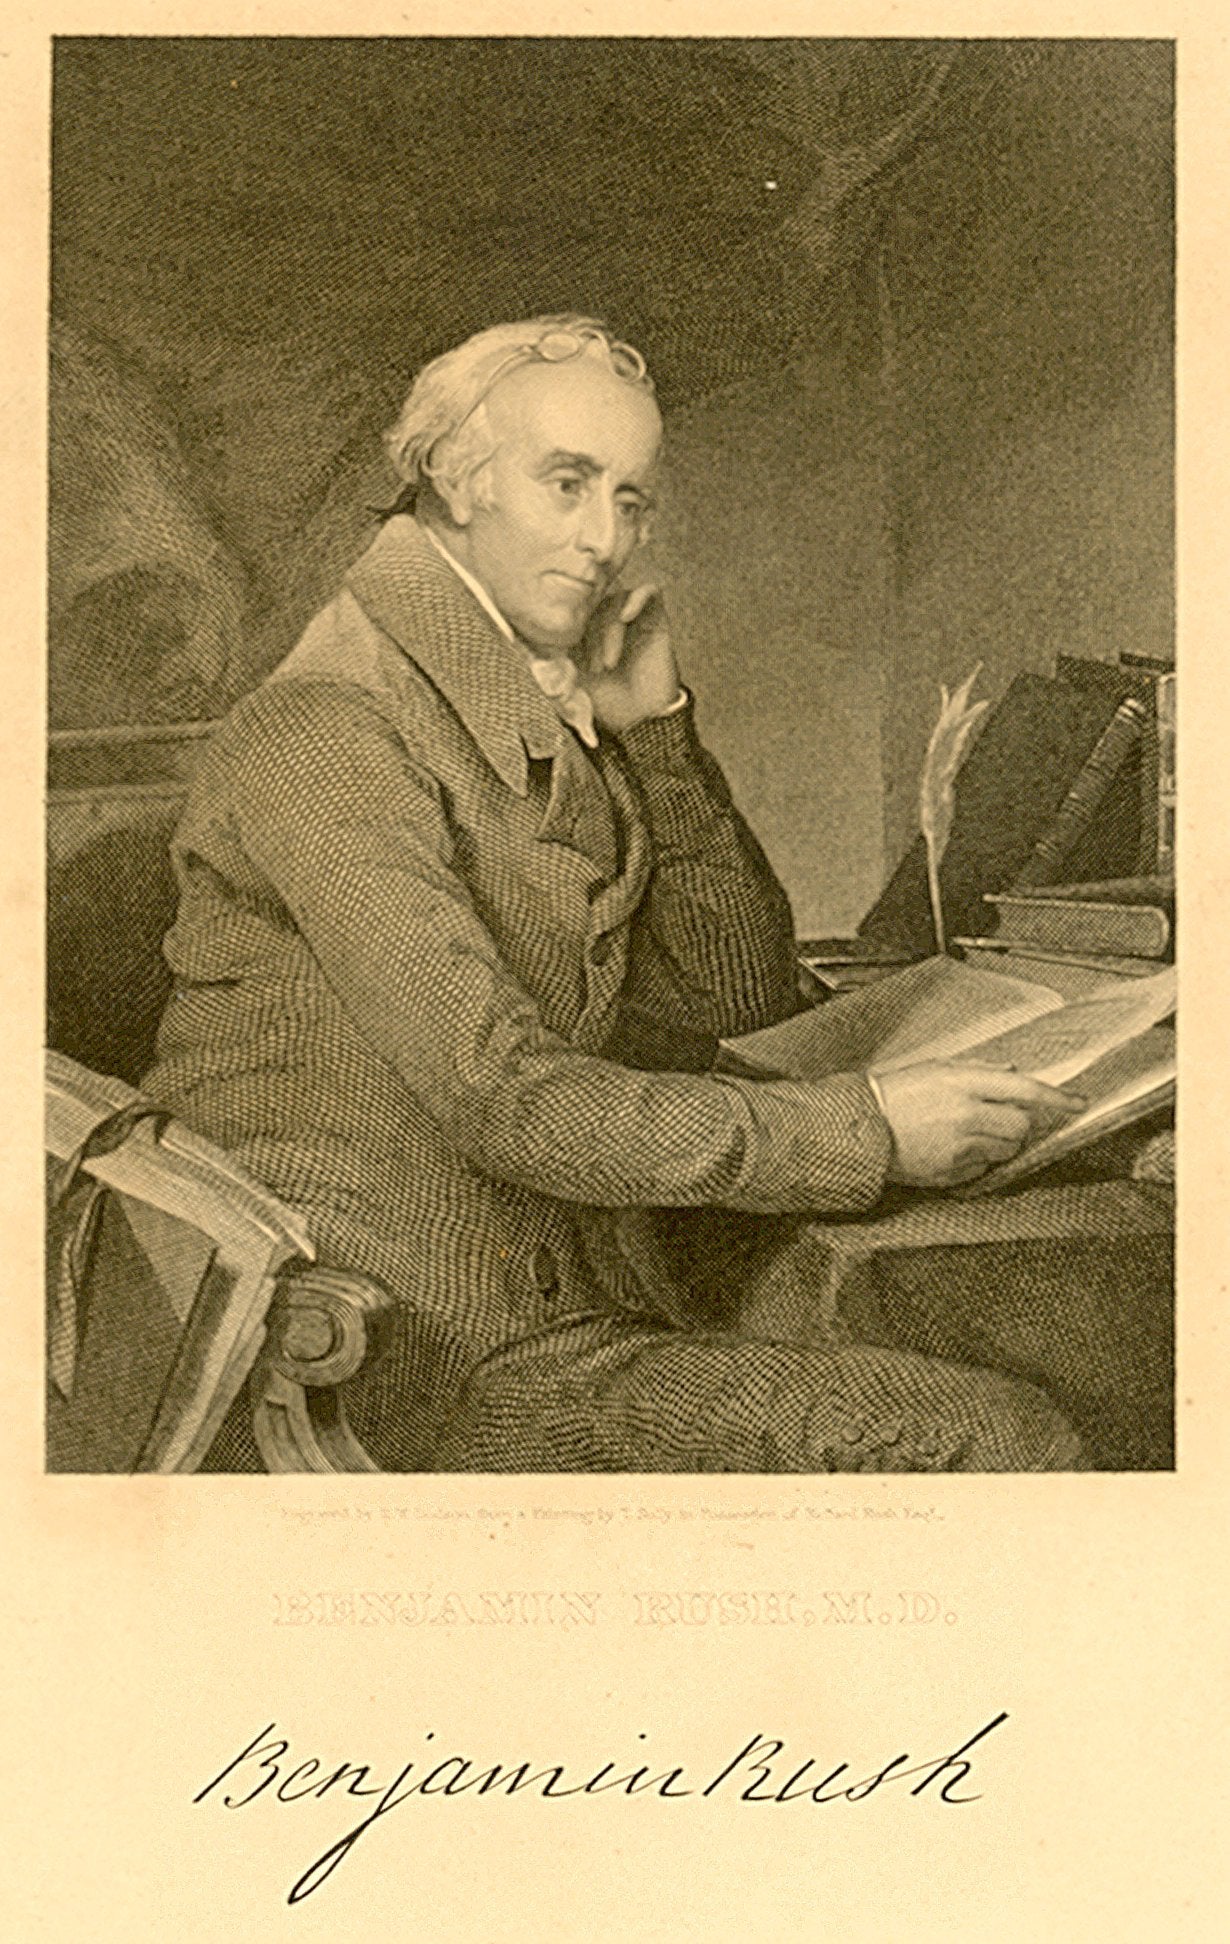 Dr. Benjamin Rush pictured at his desk